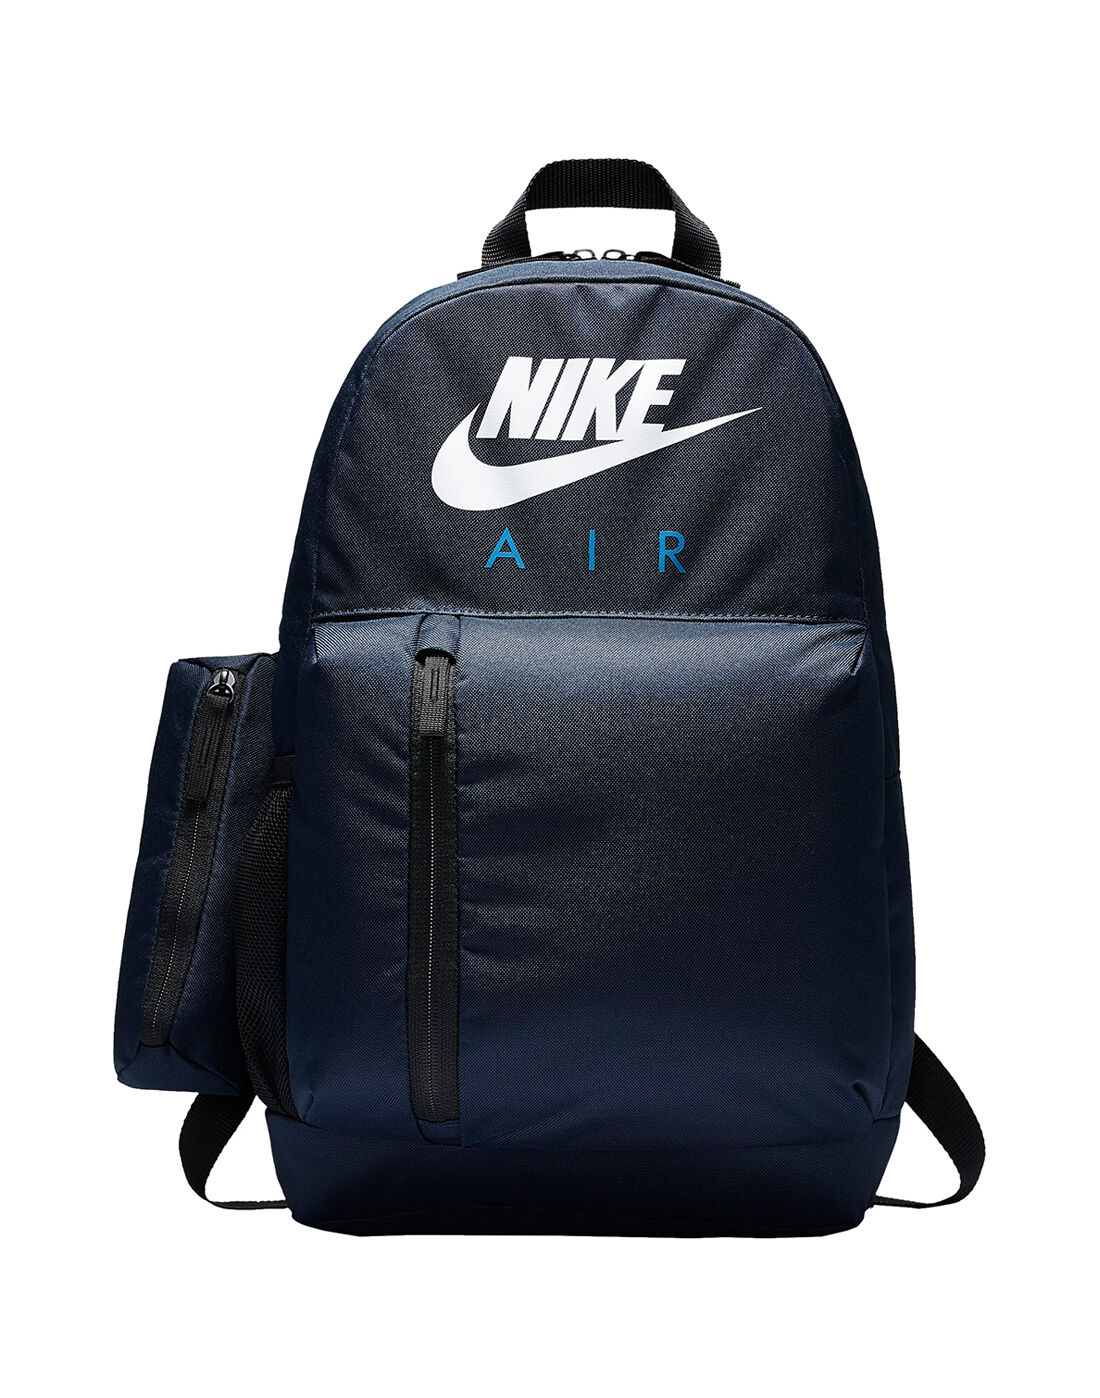 Navy Nike Air School Bag | Life Style 